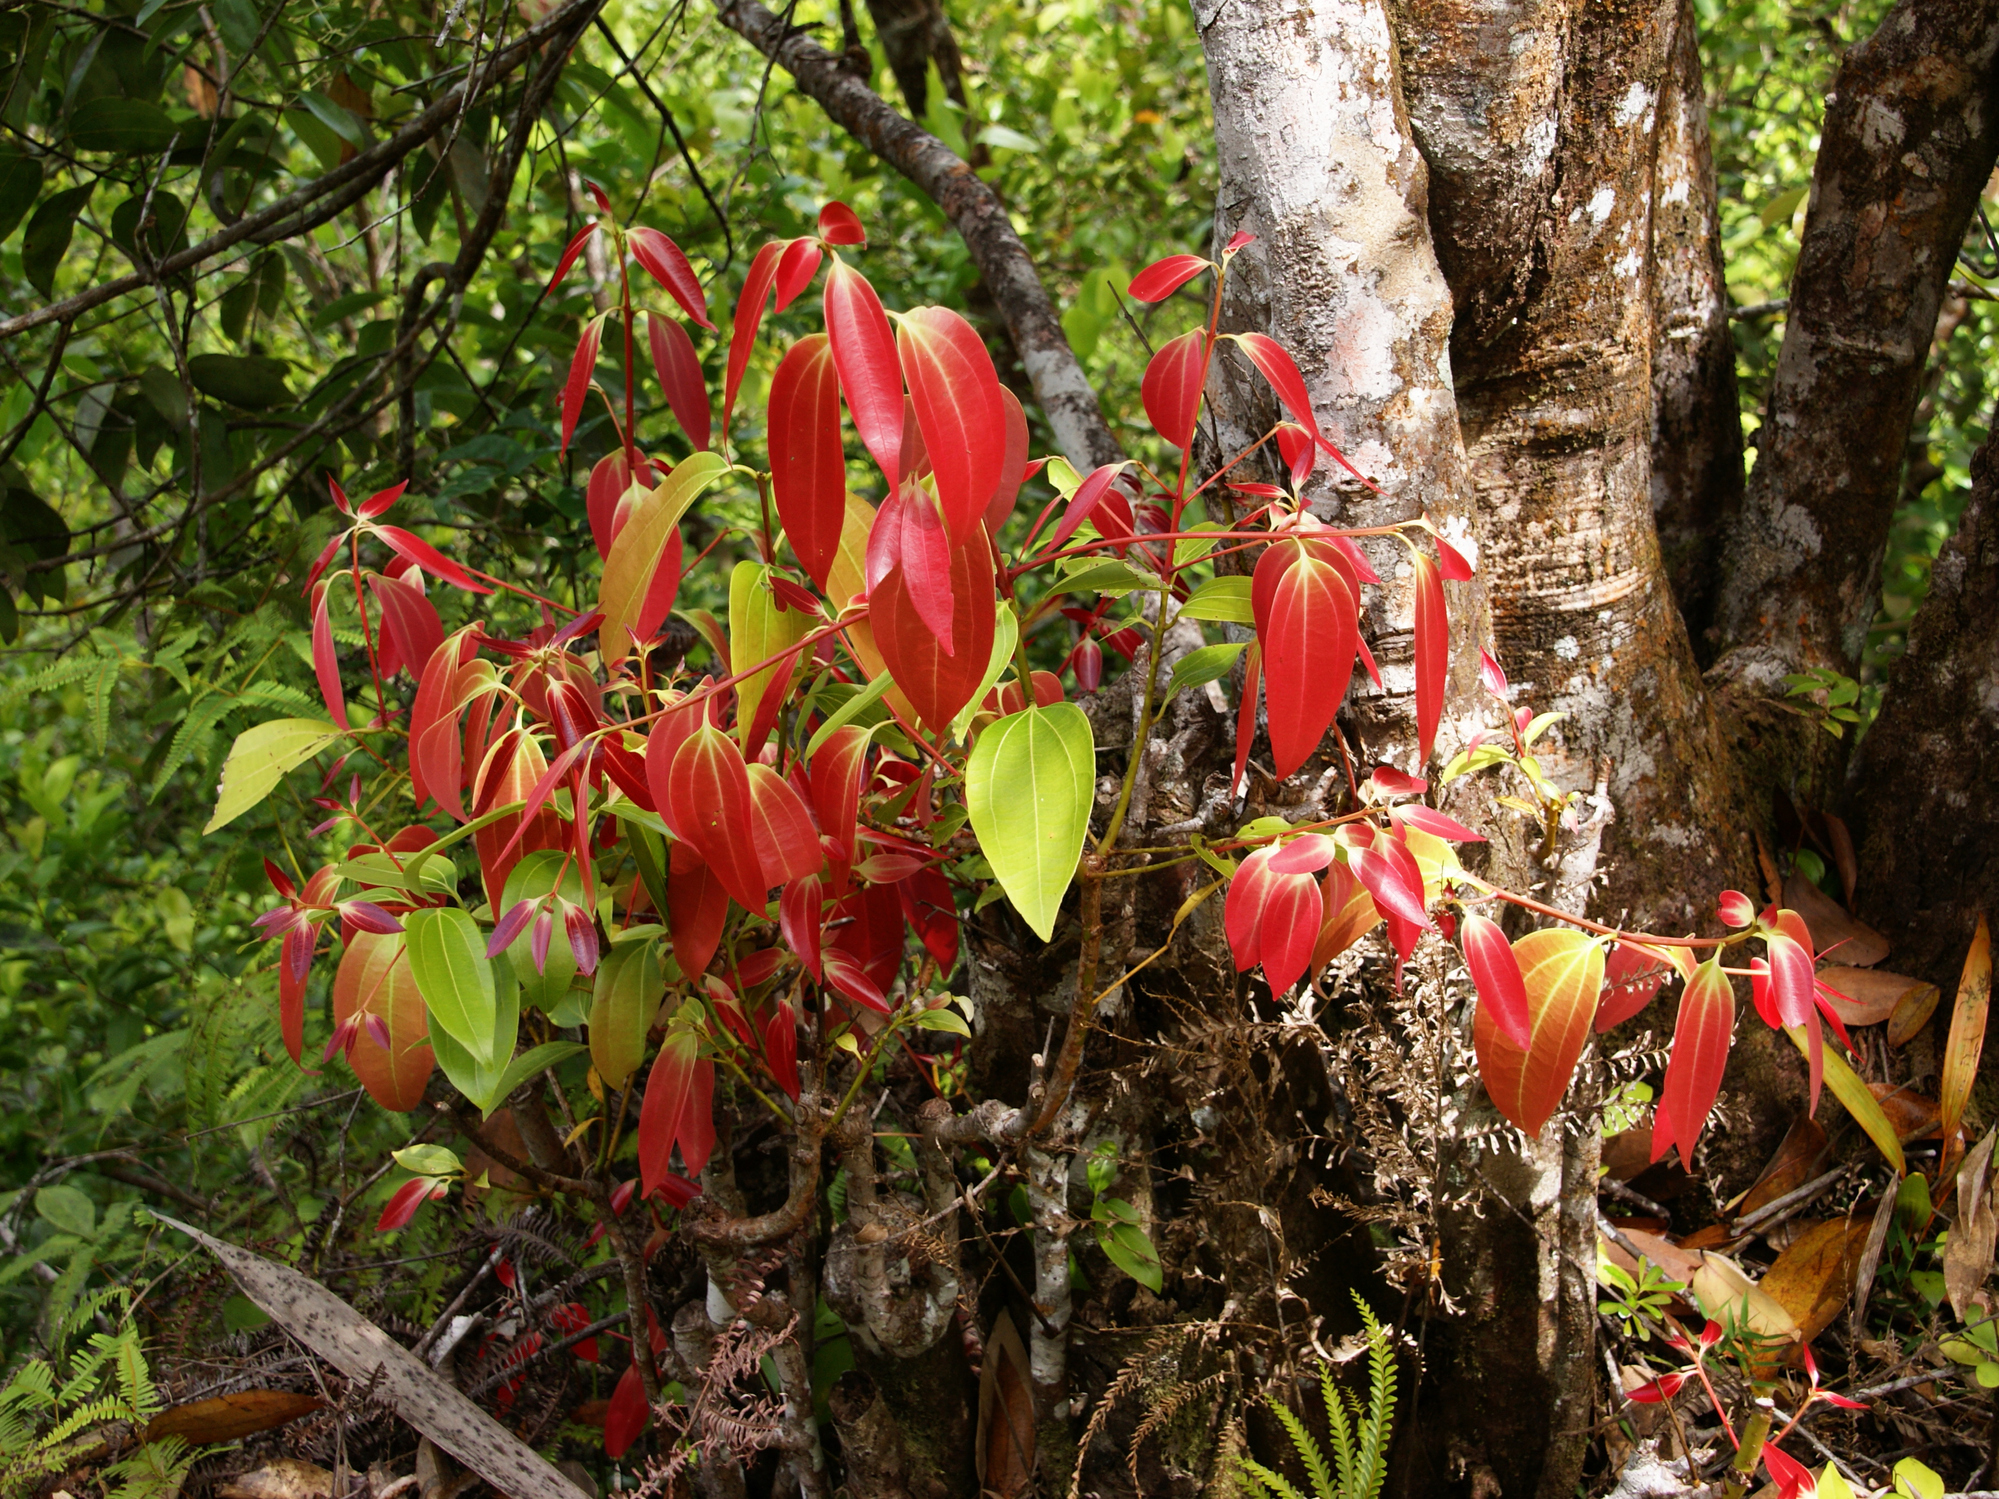 Ceylon cinnamon growing in the wild. 